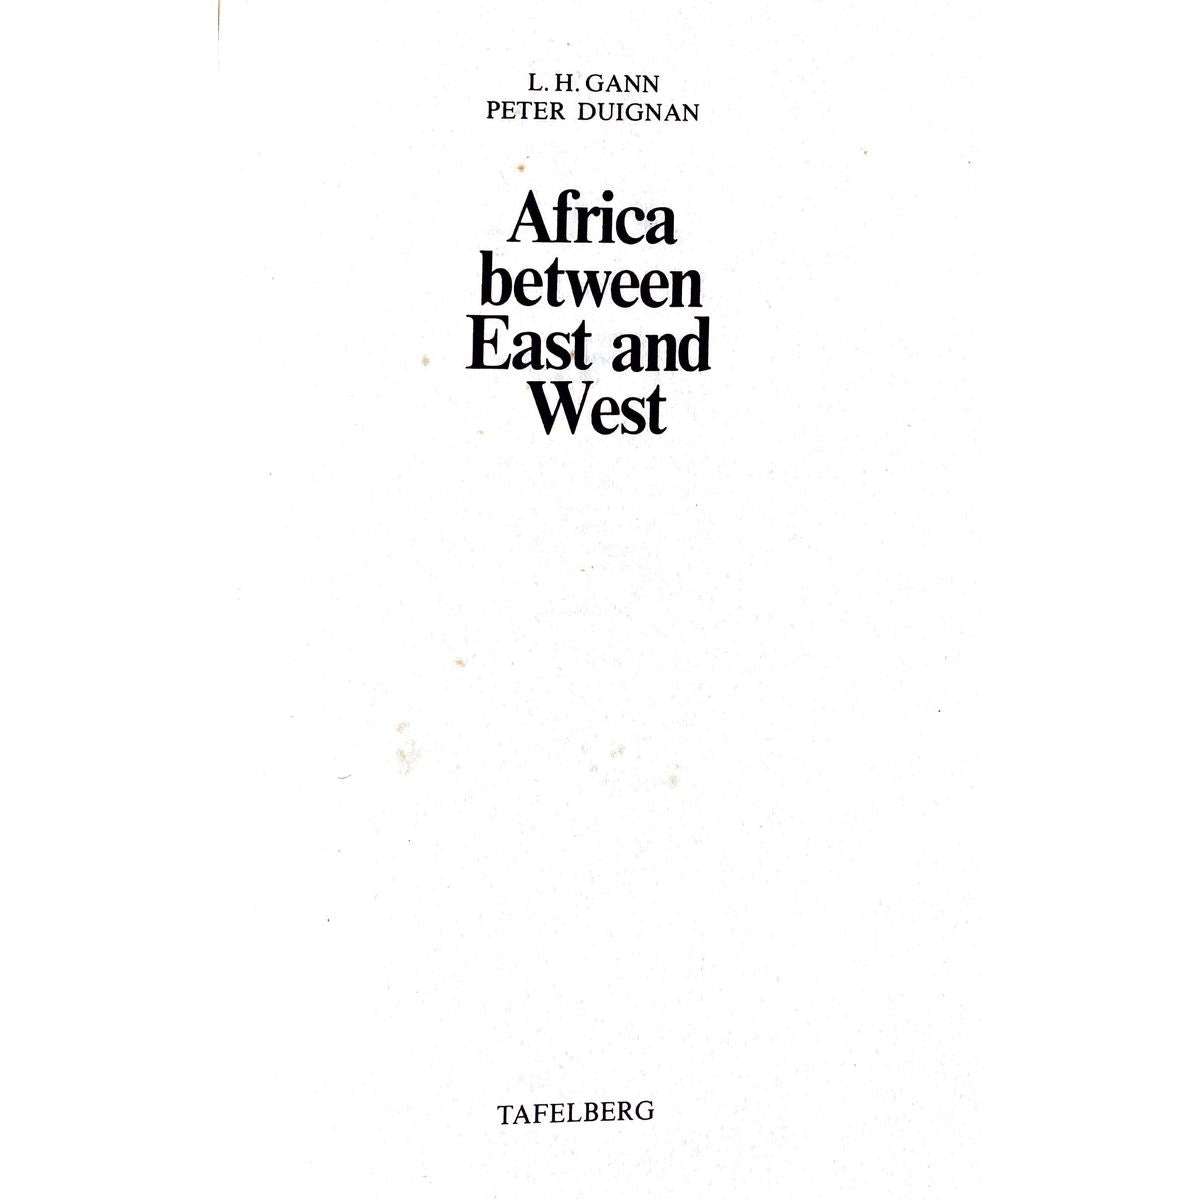 ISBN: 9780624018131 / 062401813X - Africa: Between East and West by L.H. Gann & Peter Duggan [1983]